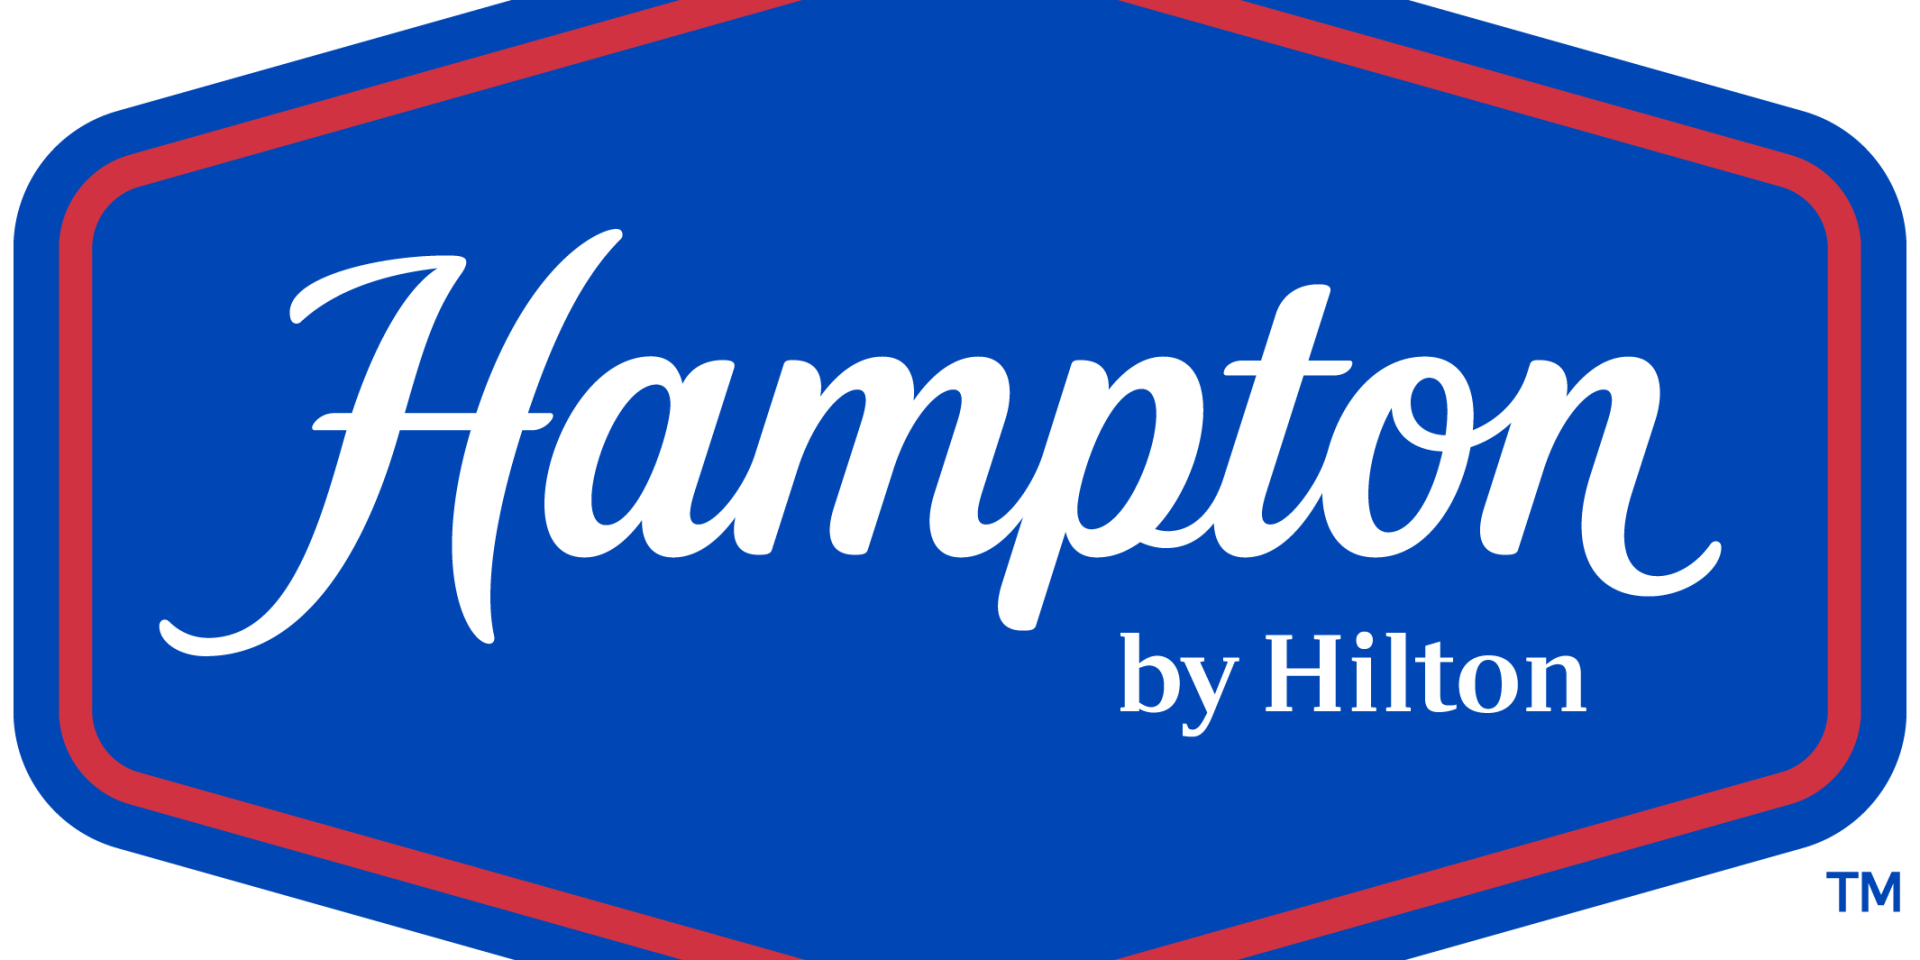 Hampton by Hilton - Logo - Color